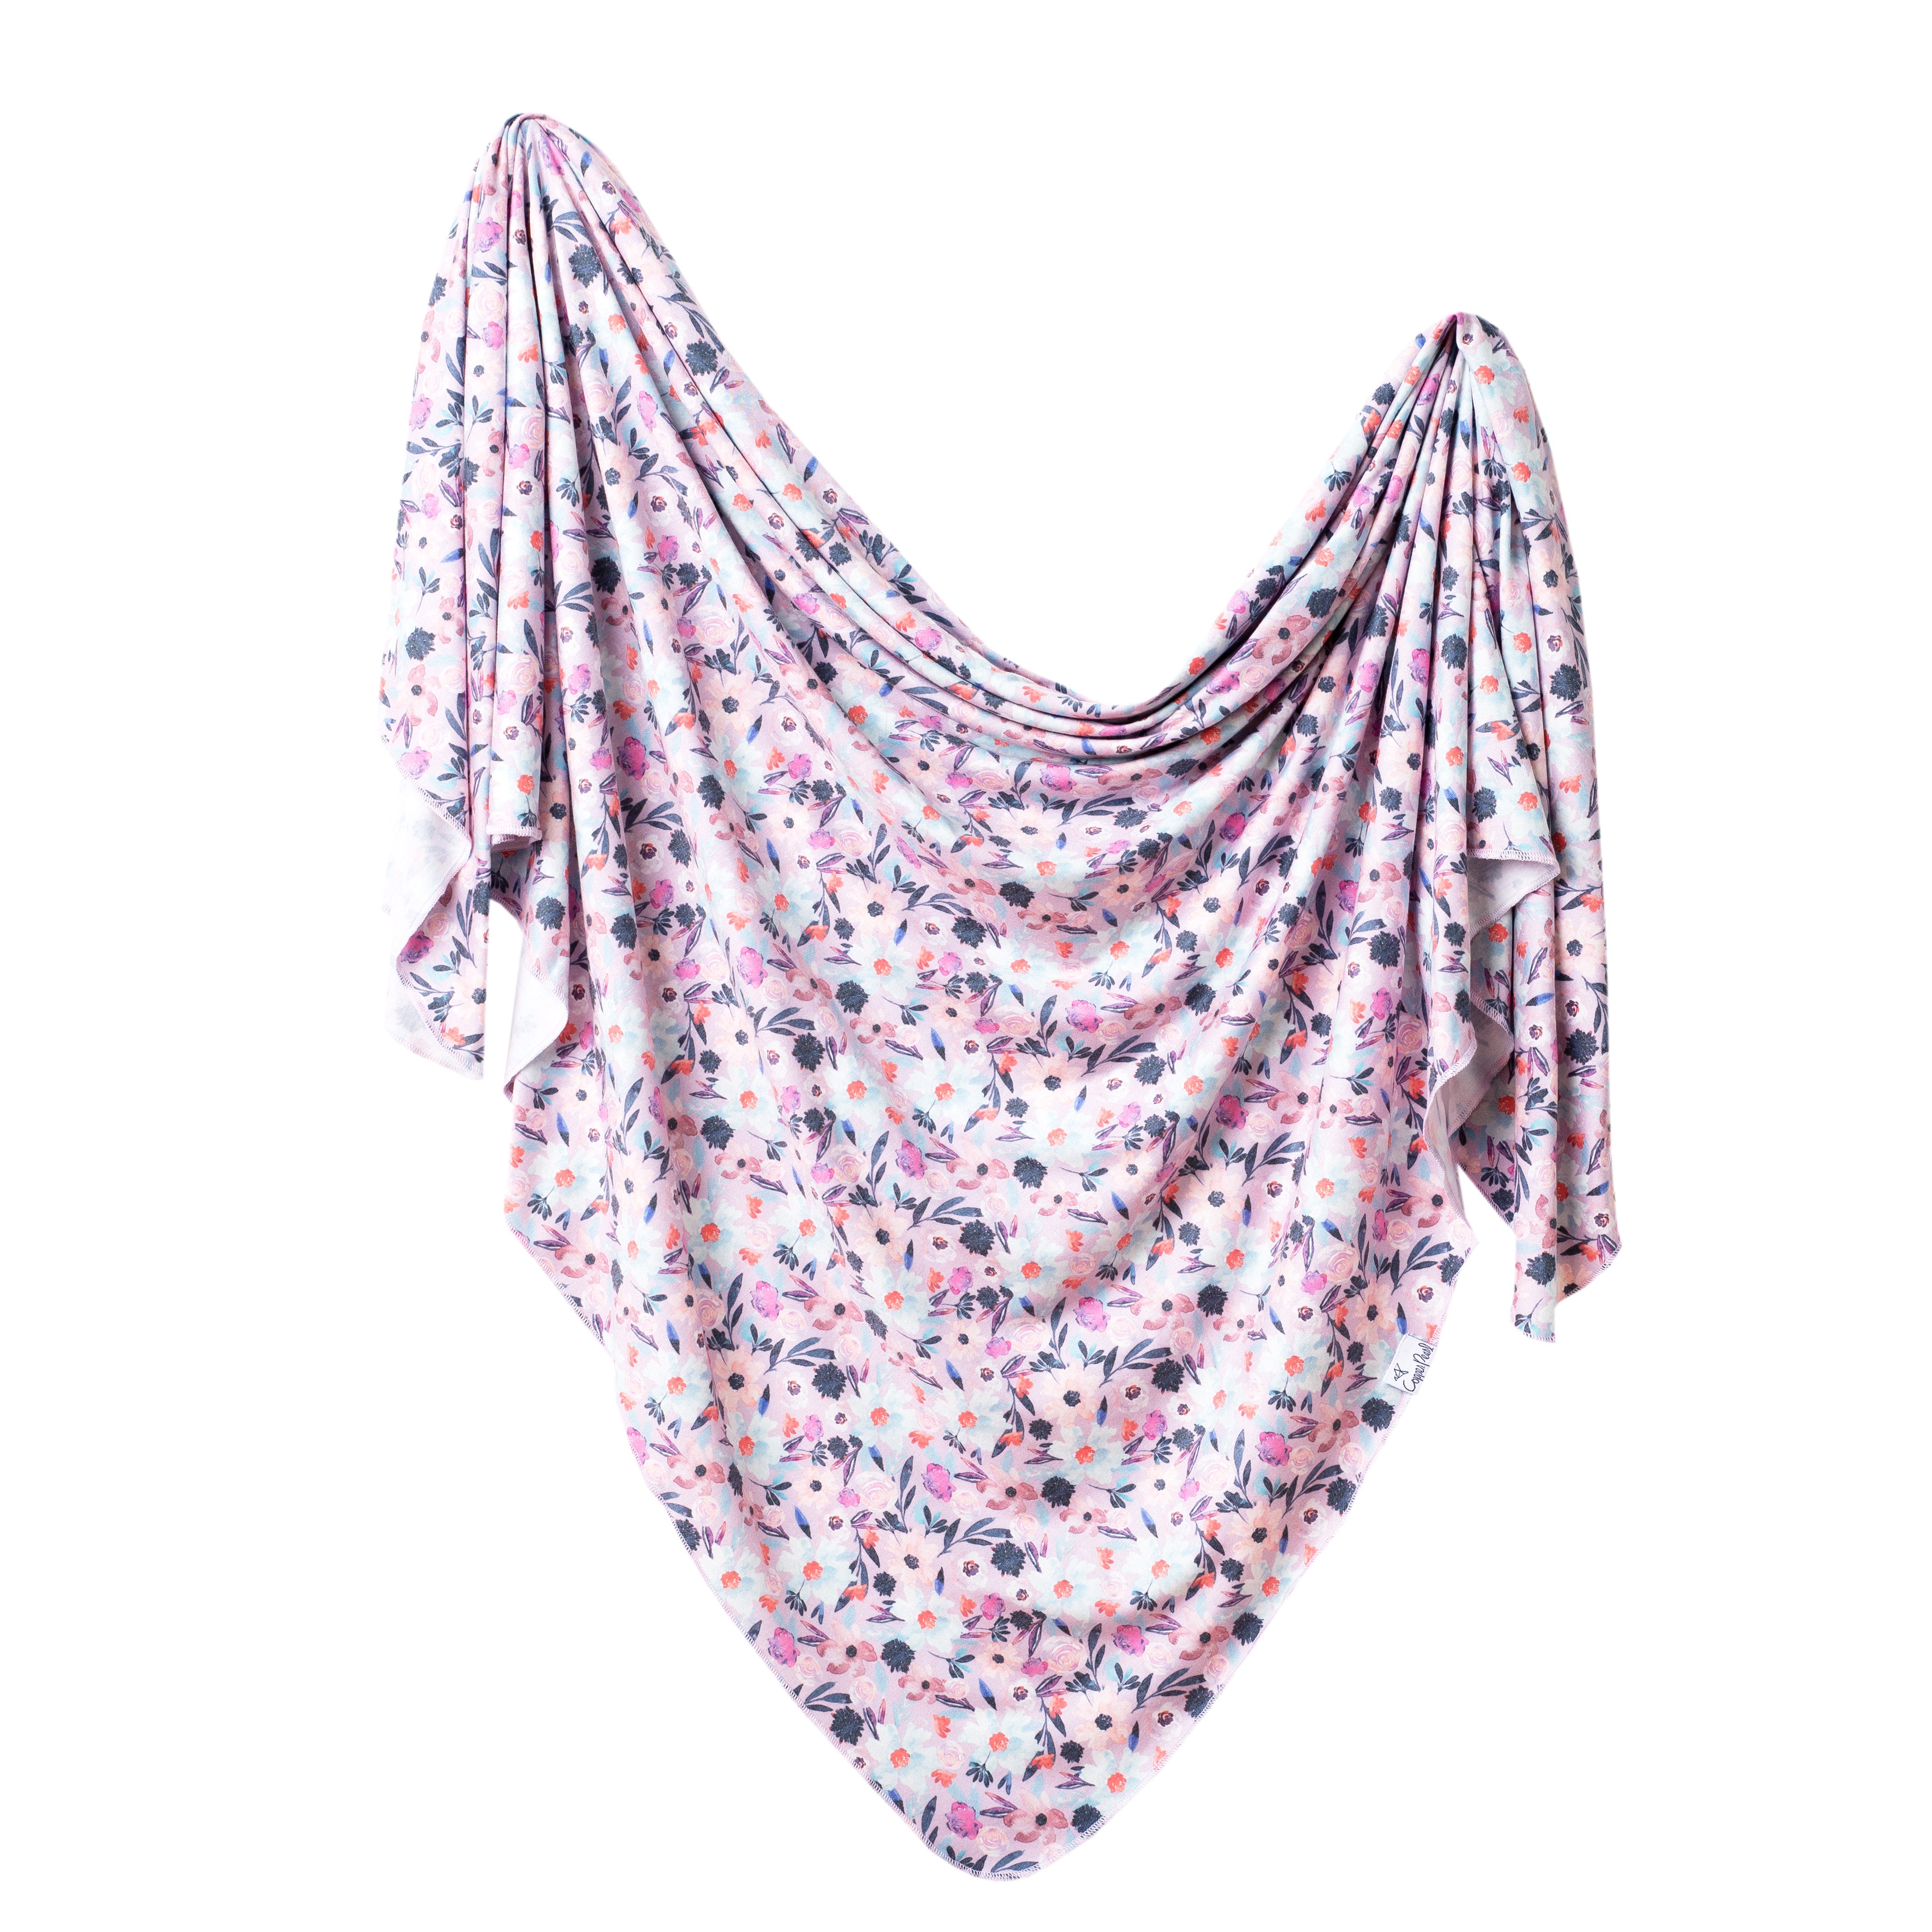 Knit Swaddle Blanket - Morgan